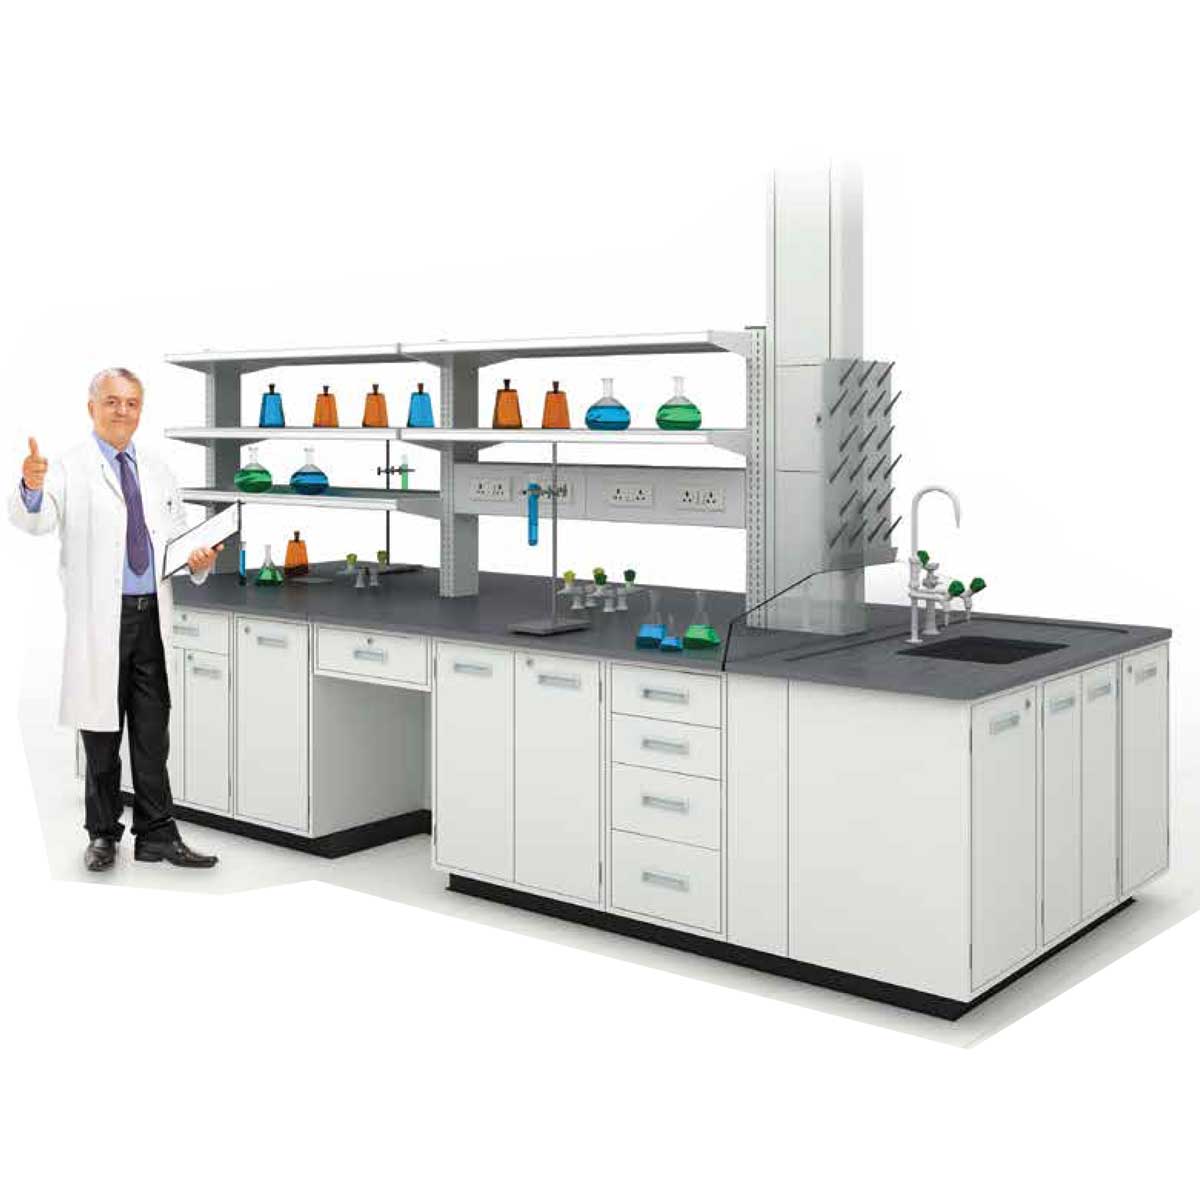 Laboratory Desks Manufacturers, Suppliers in Rohini Sector 22